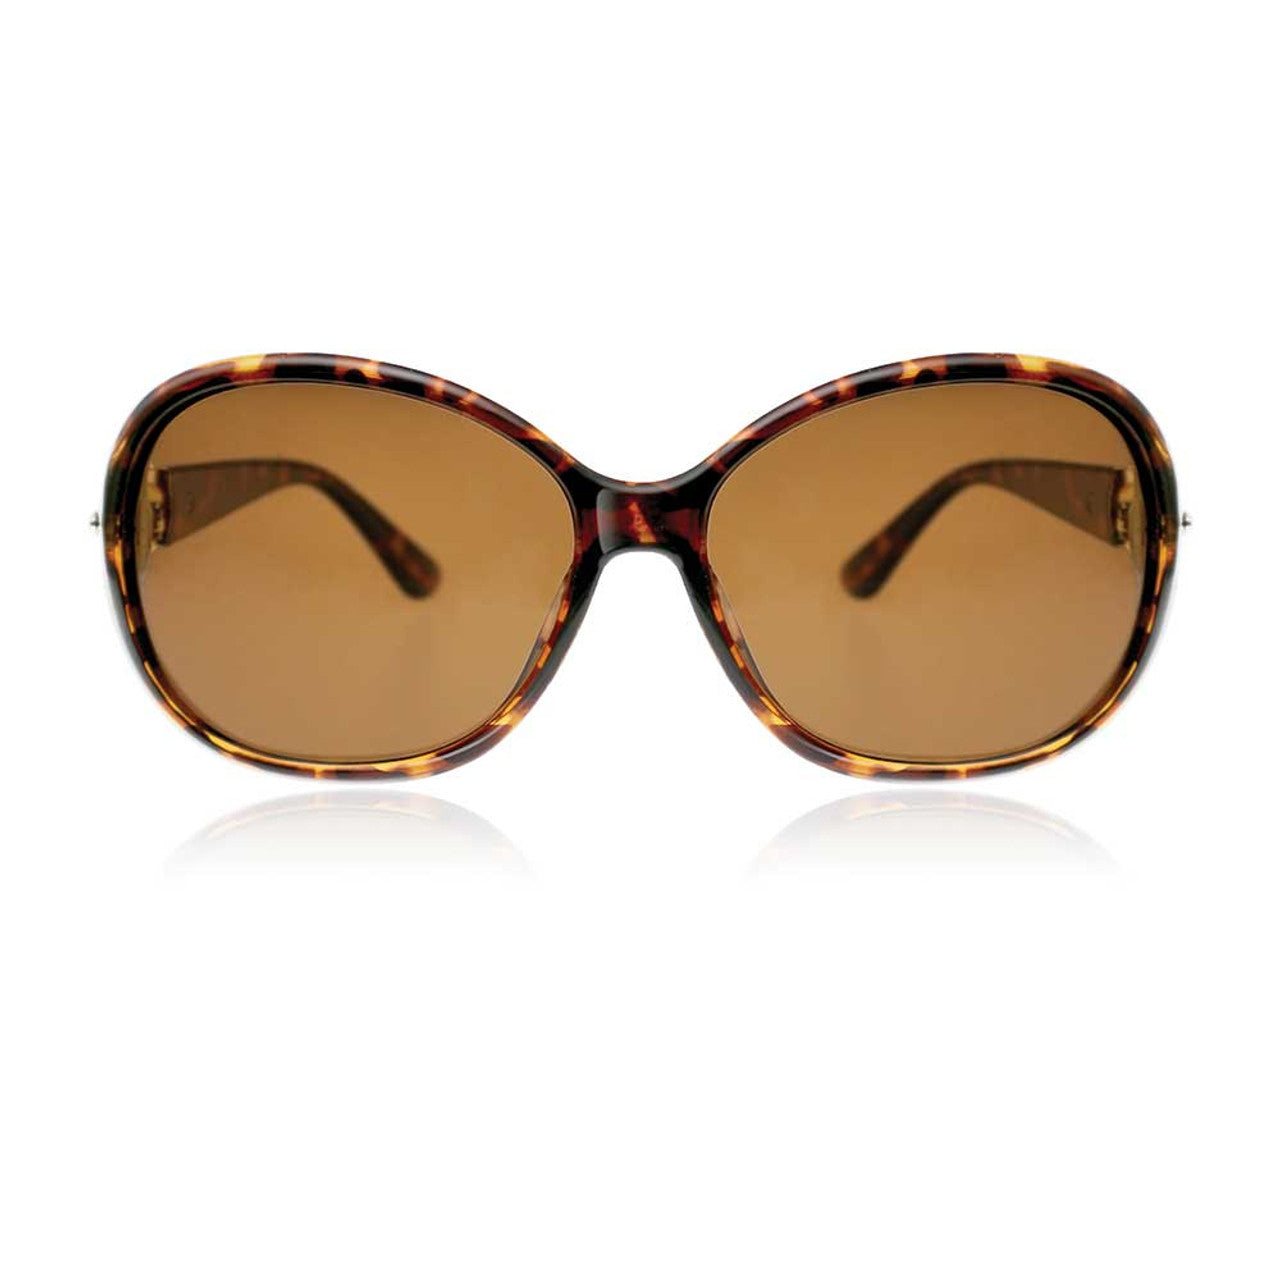 Tipperary Crystal Milano Tortoise Sunglasses